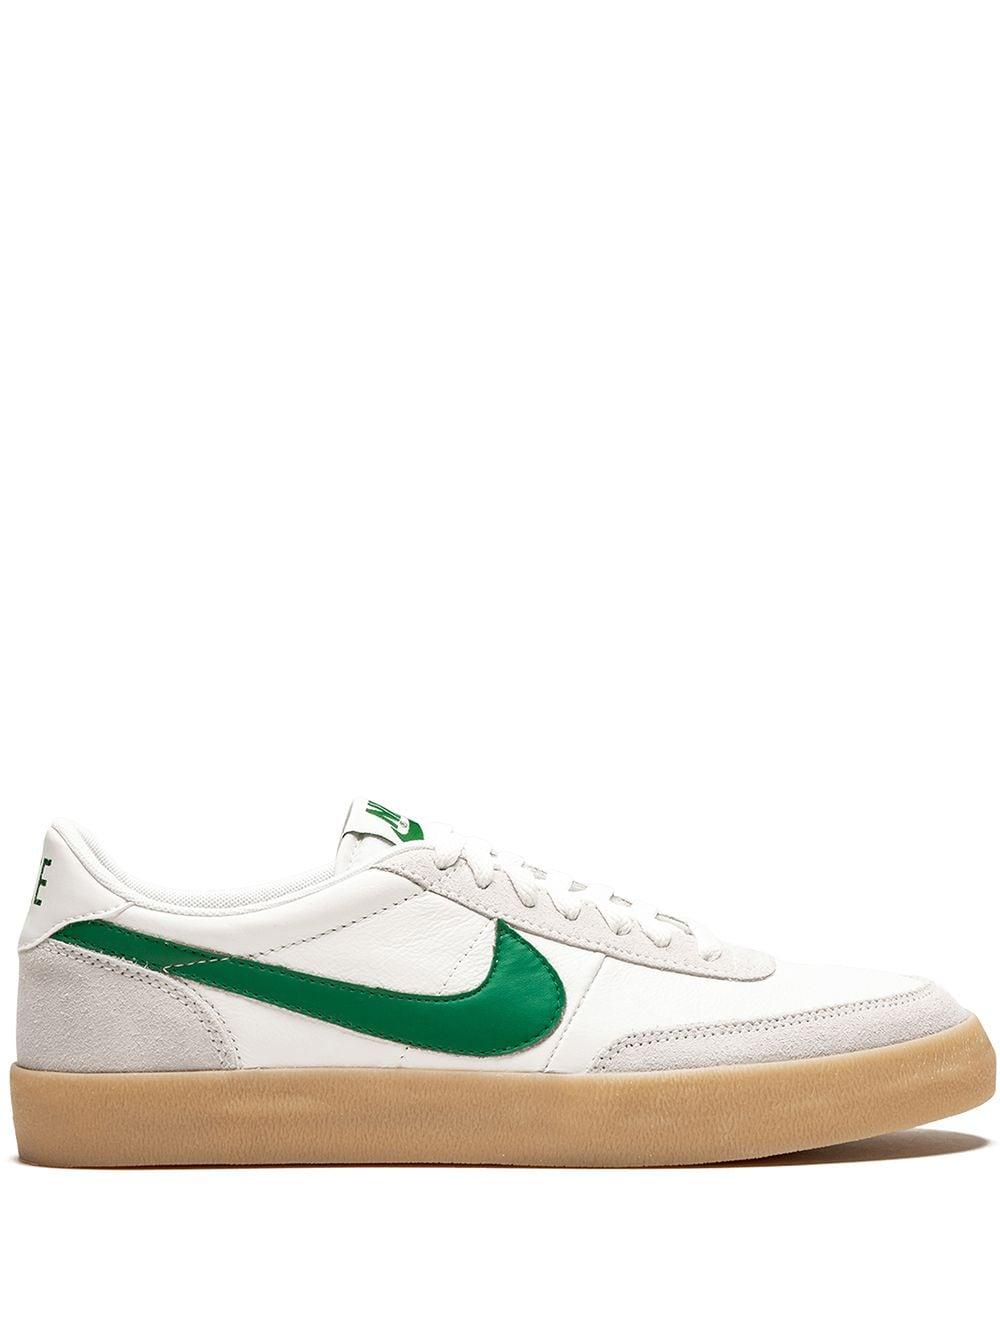 Nike X J.crew Killshot 2 "lucid Green" Leather Sneakers in White | Lyst